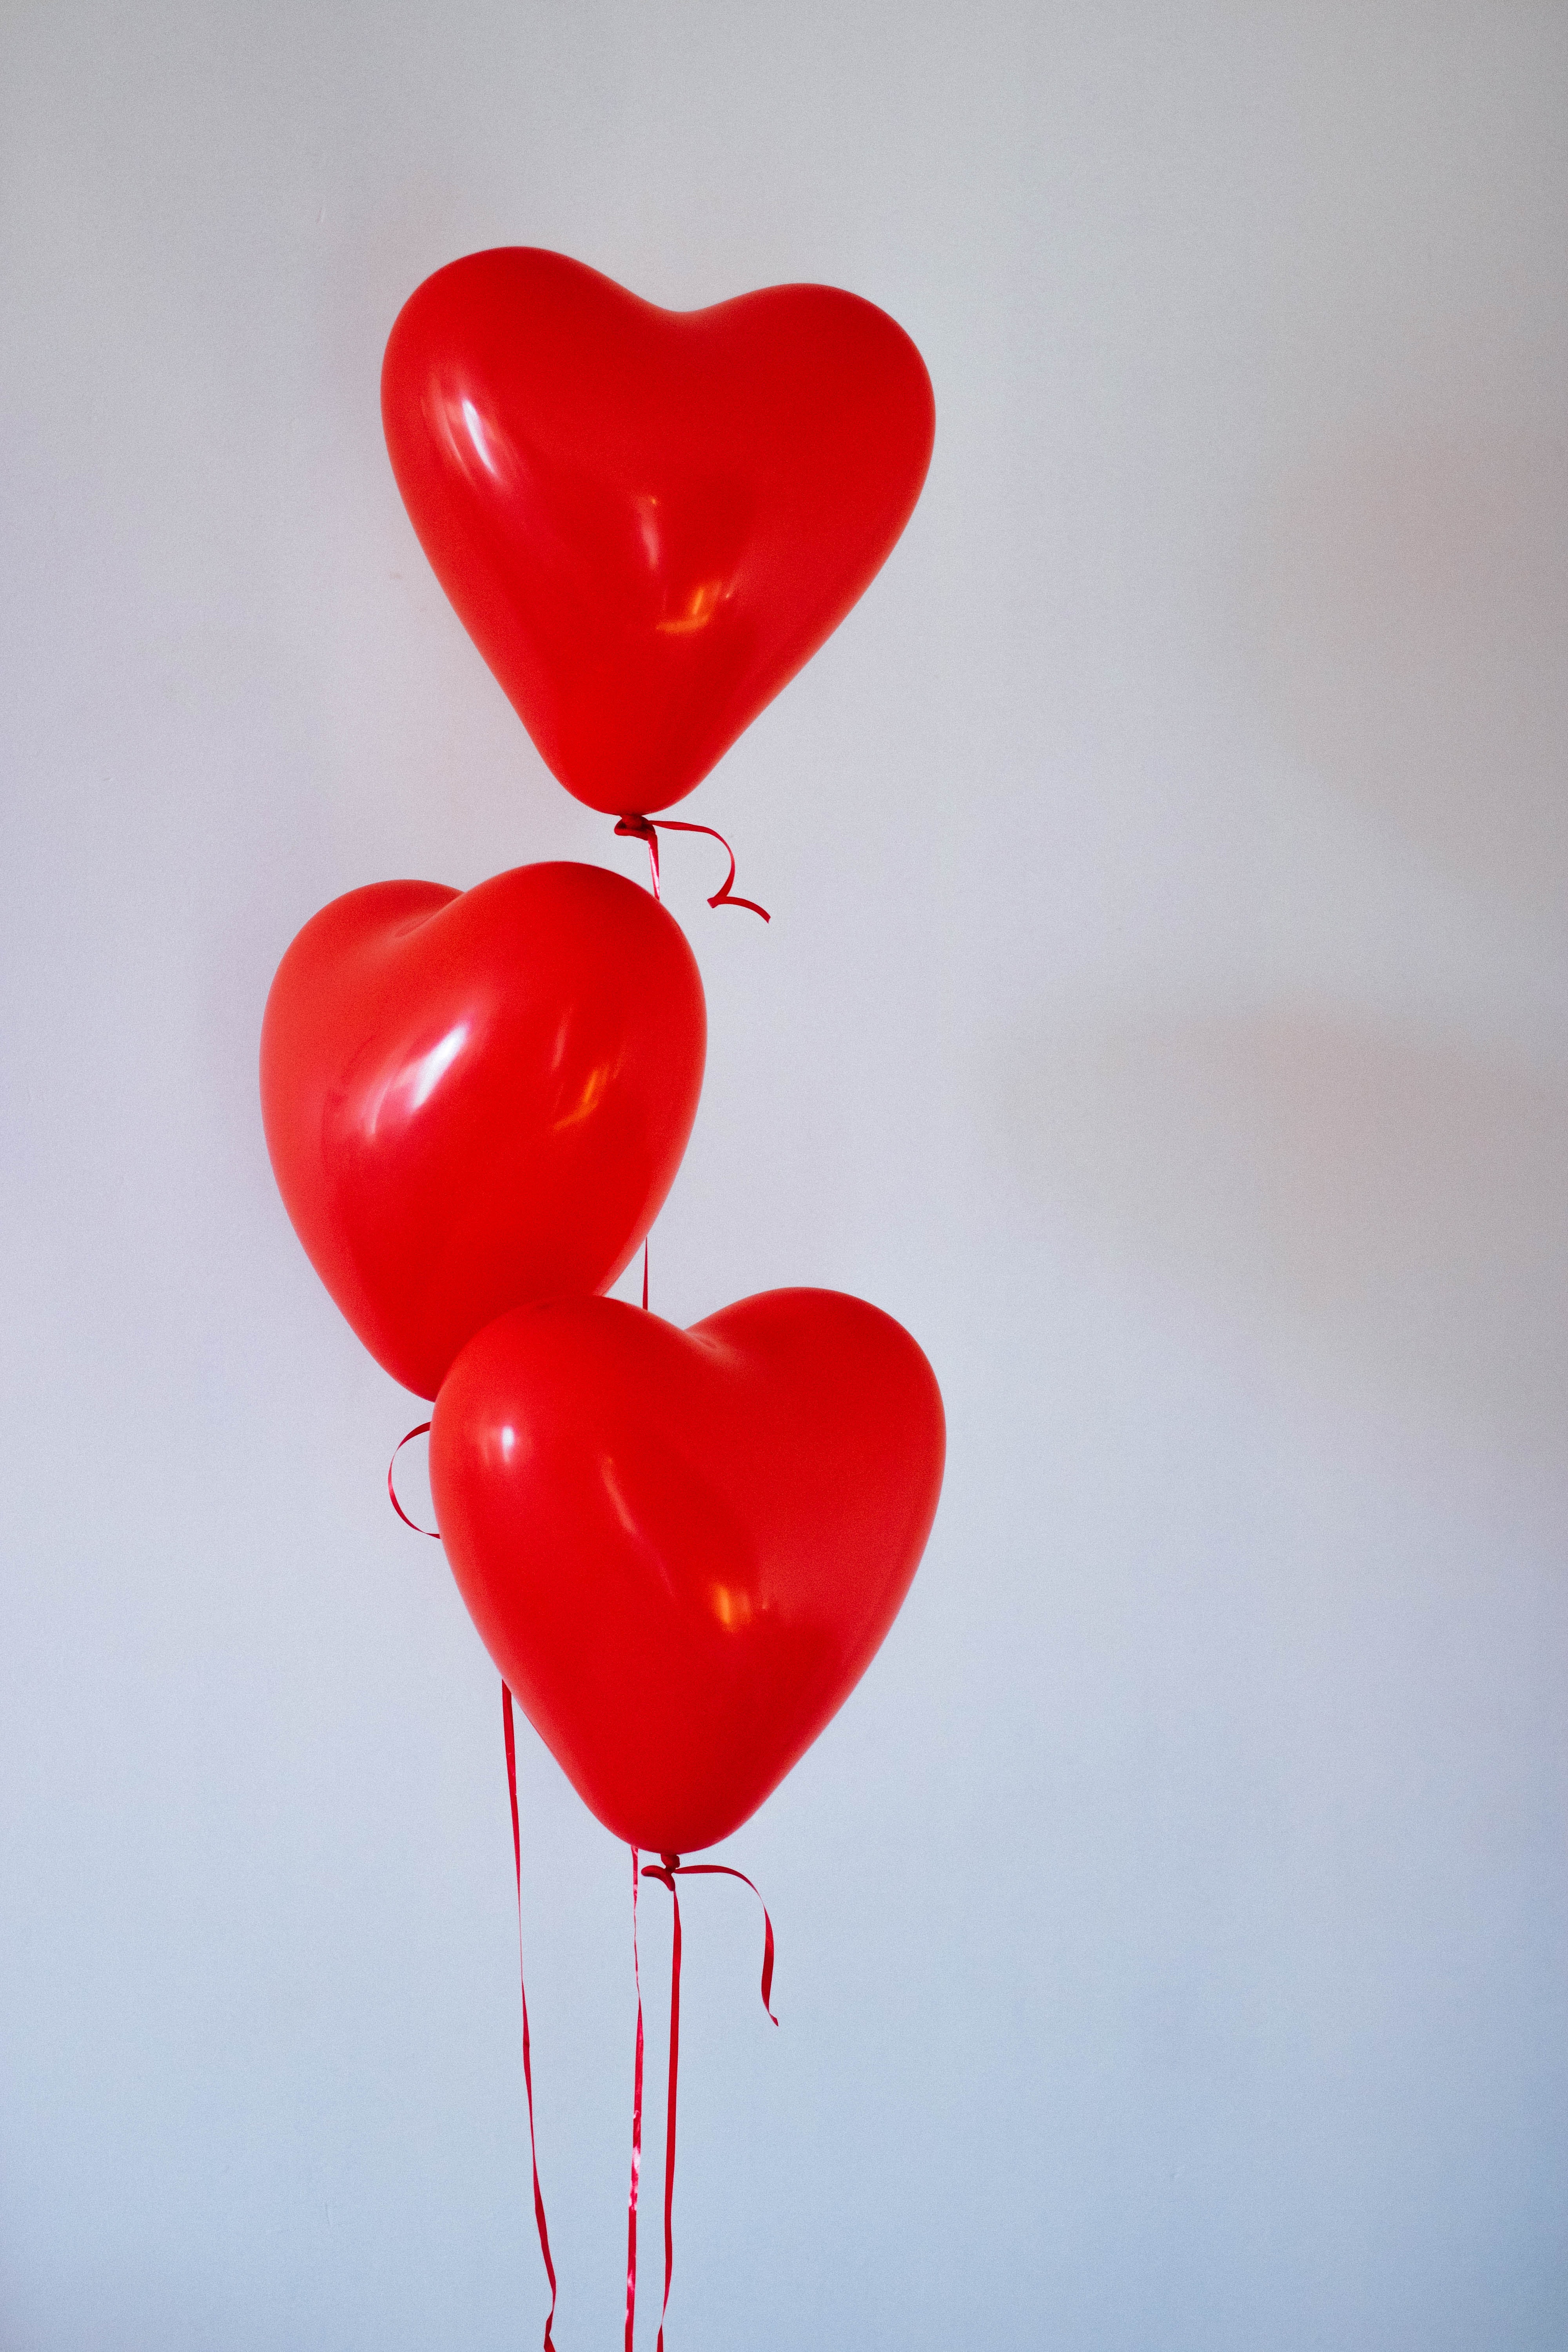 Wallpaper Red Heart Balloons, Balloon, Love Foil Balloons, Heart Balloon, Love Balloon, Download Free Image